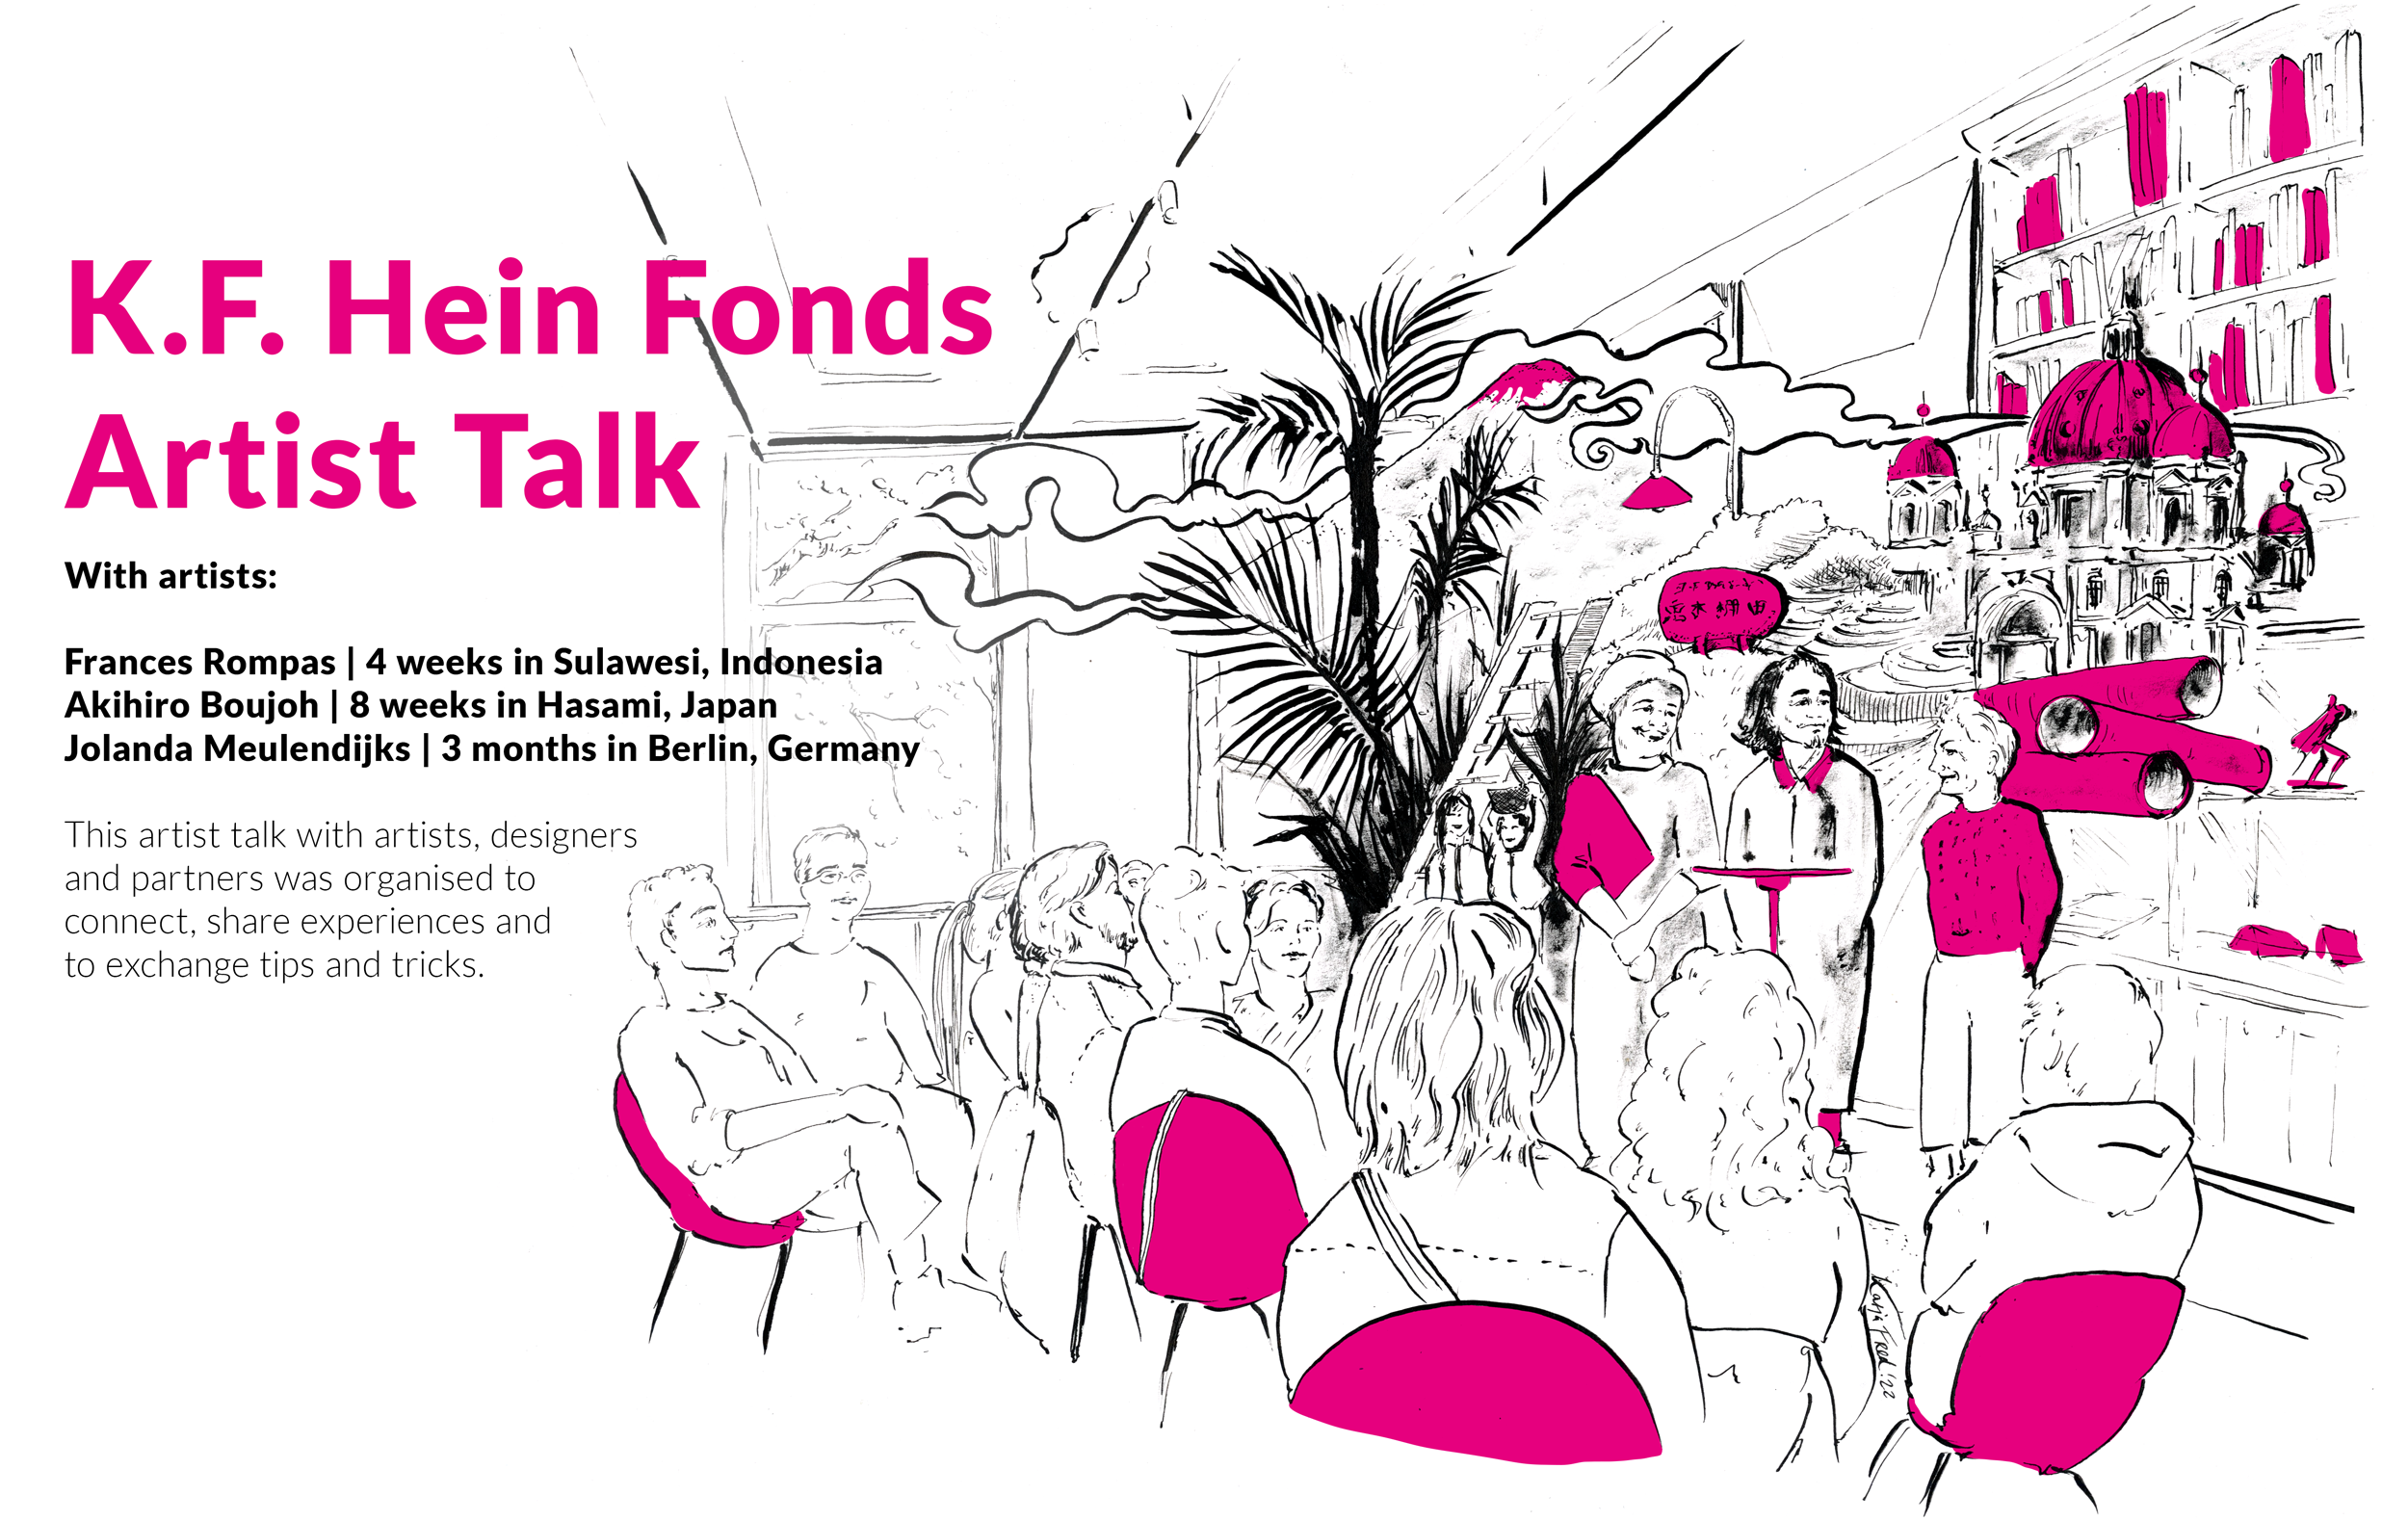 Illustration of the K.F. Hein Fonds library filled with people listening to three artists. Text on image: K.F. Hein Fonds Artist Talk with artists Frances Rompas, Akihiro Boujoh, Jolanda Meulendijks.